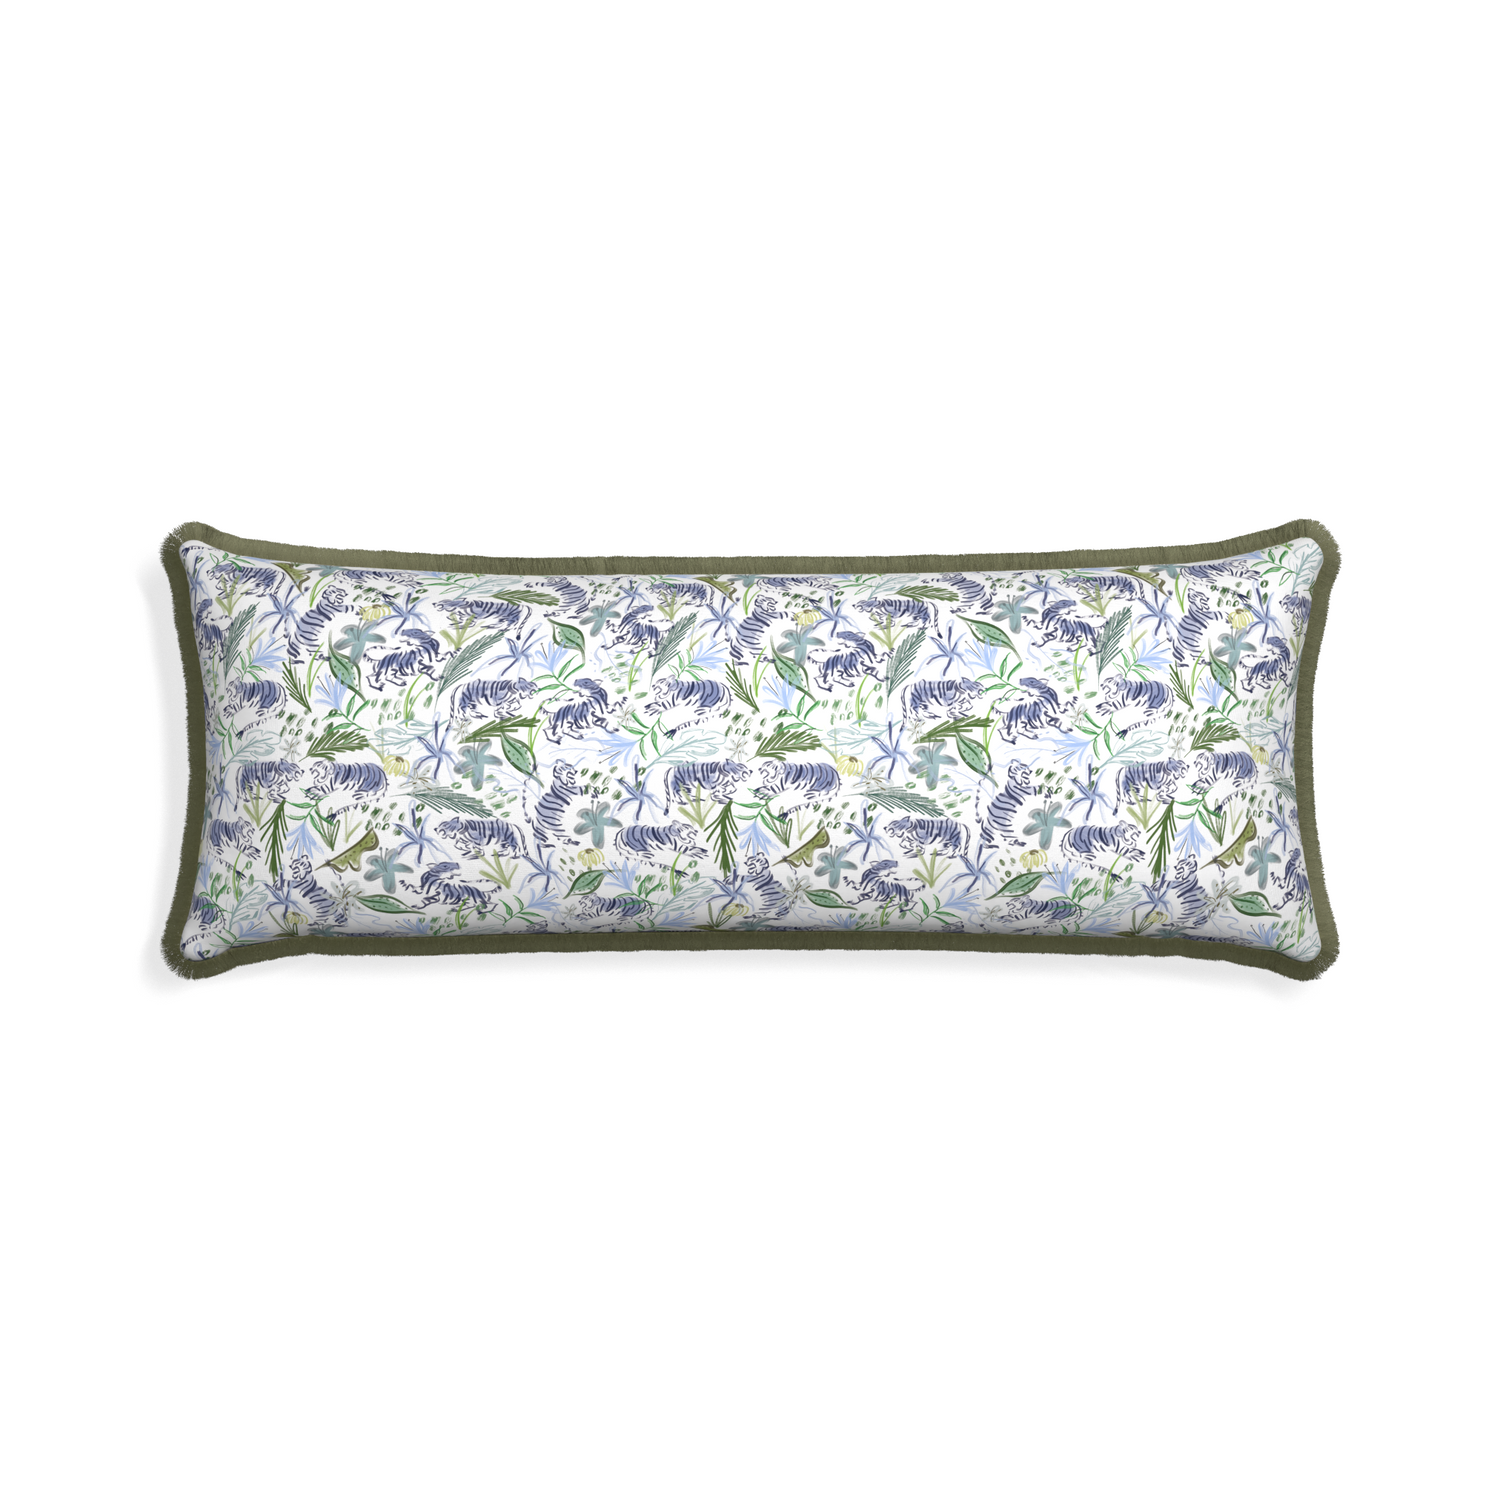 Xl-lumbar frida green custom pillow with sage fringe on white background